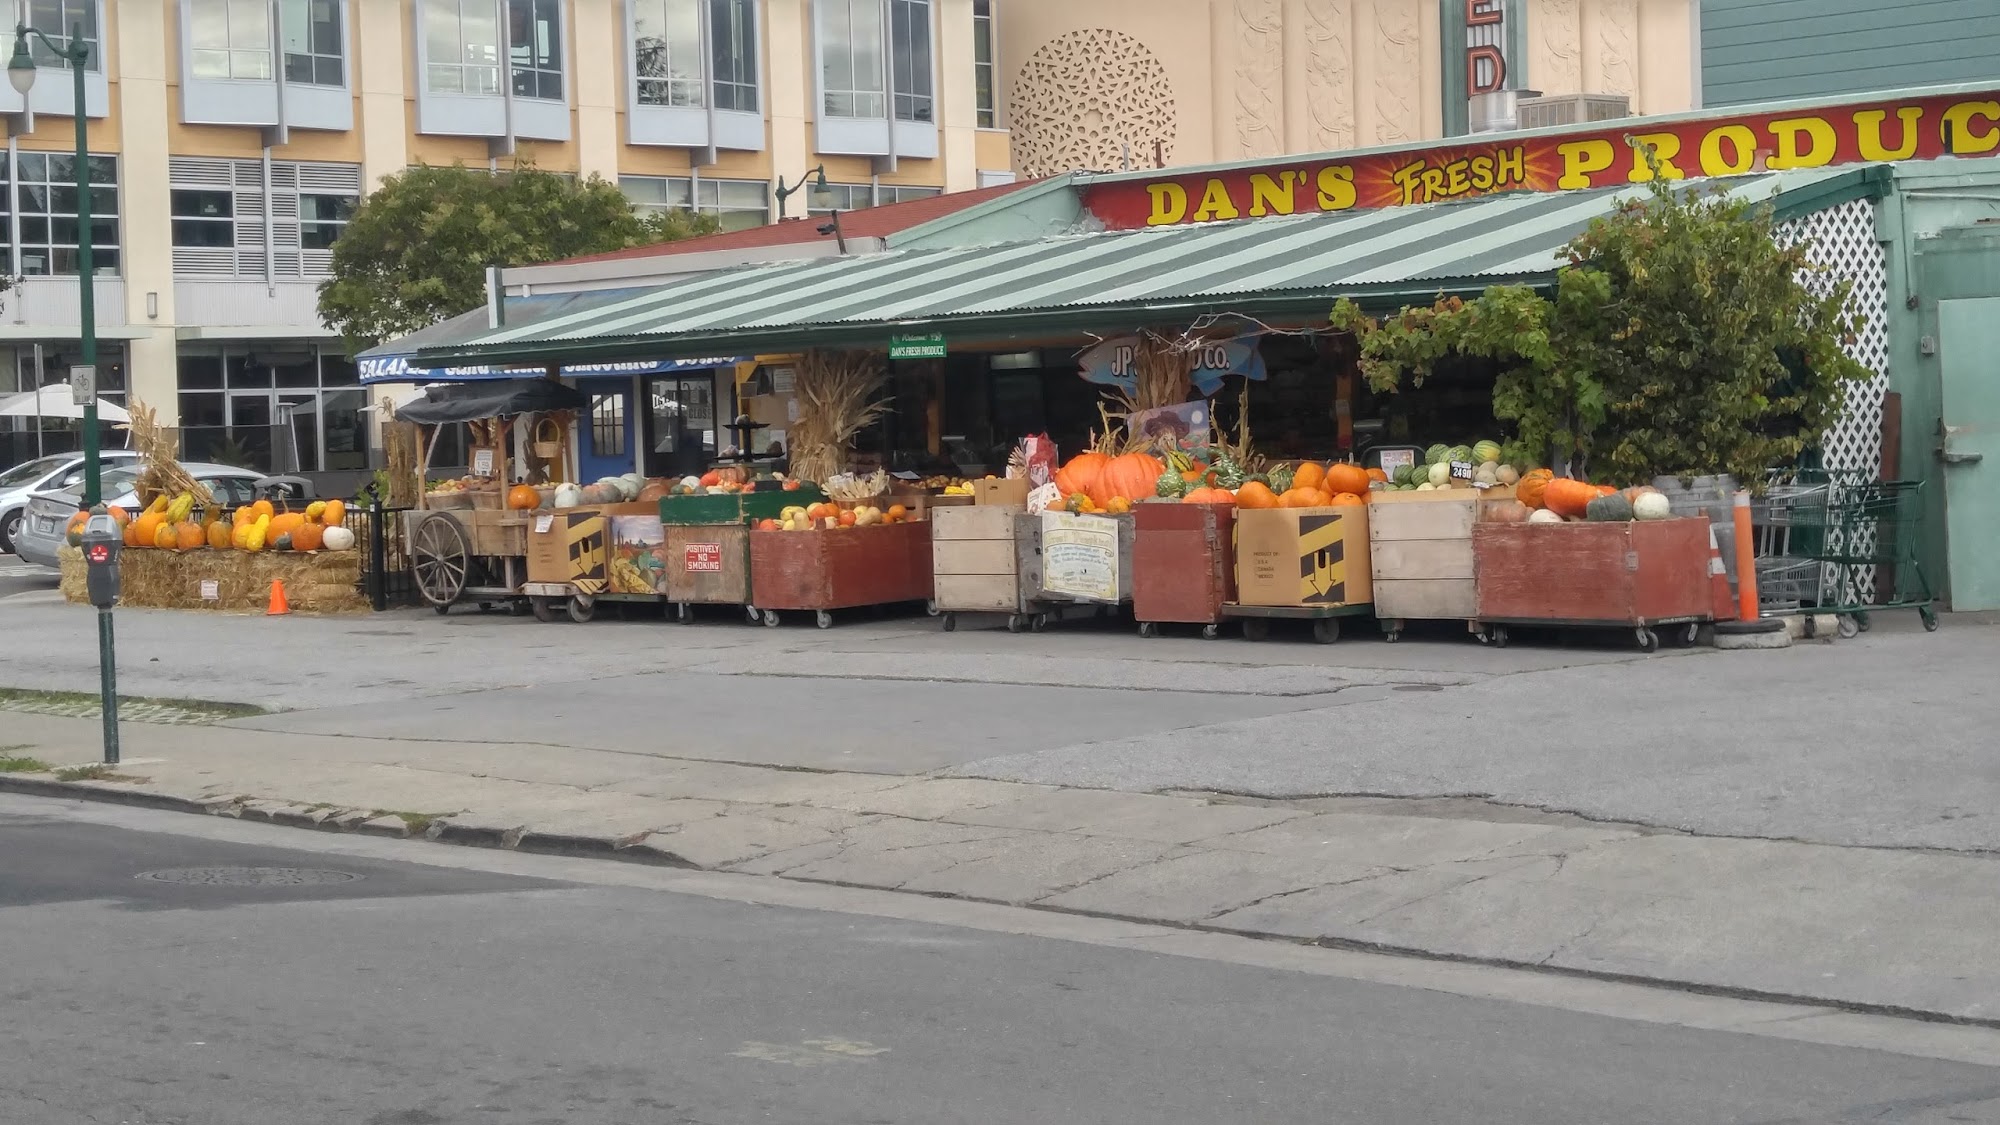 Dan's Farmers Market